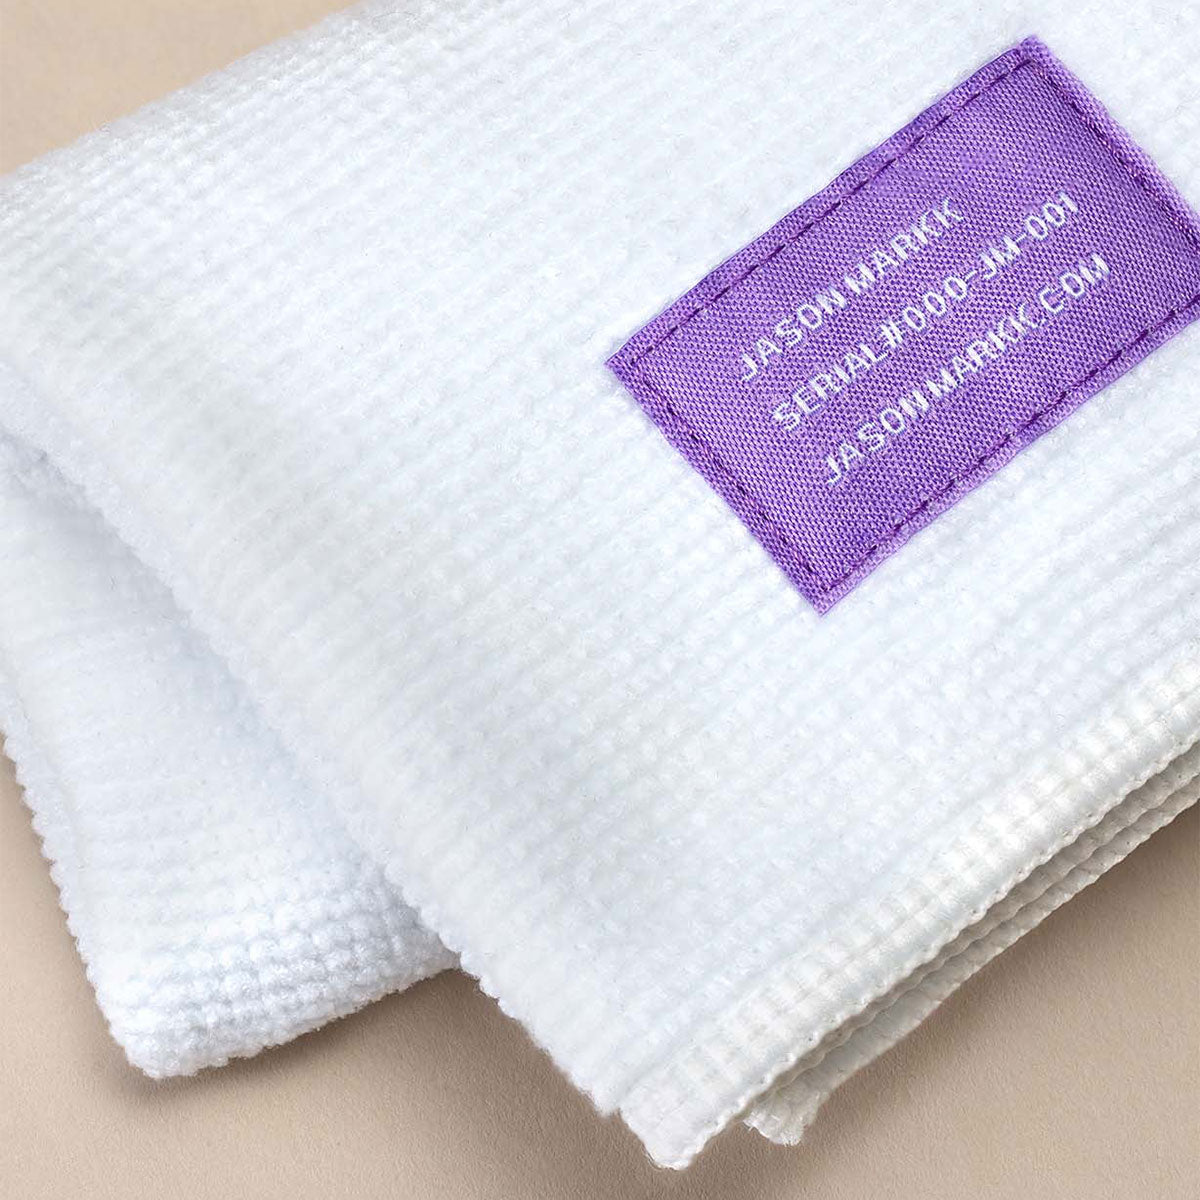 Toalla de Microfibra Premium para Limpieza de Calzado "Premium Microfiber Towel" - Limpiadores de Calzado Jason Markk